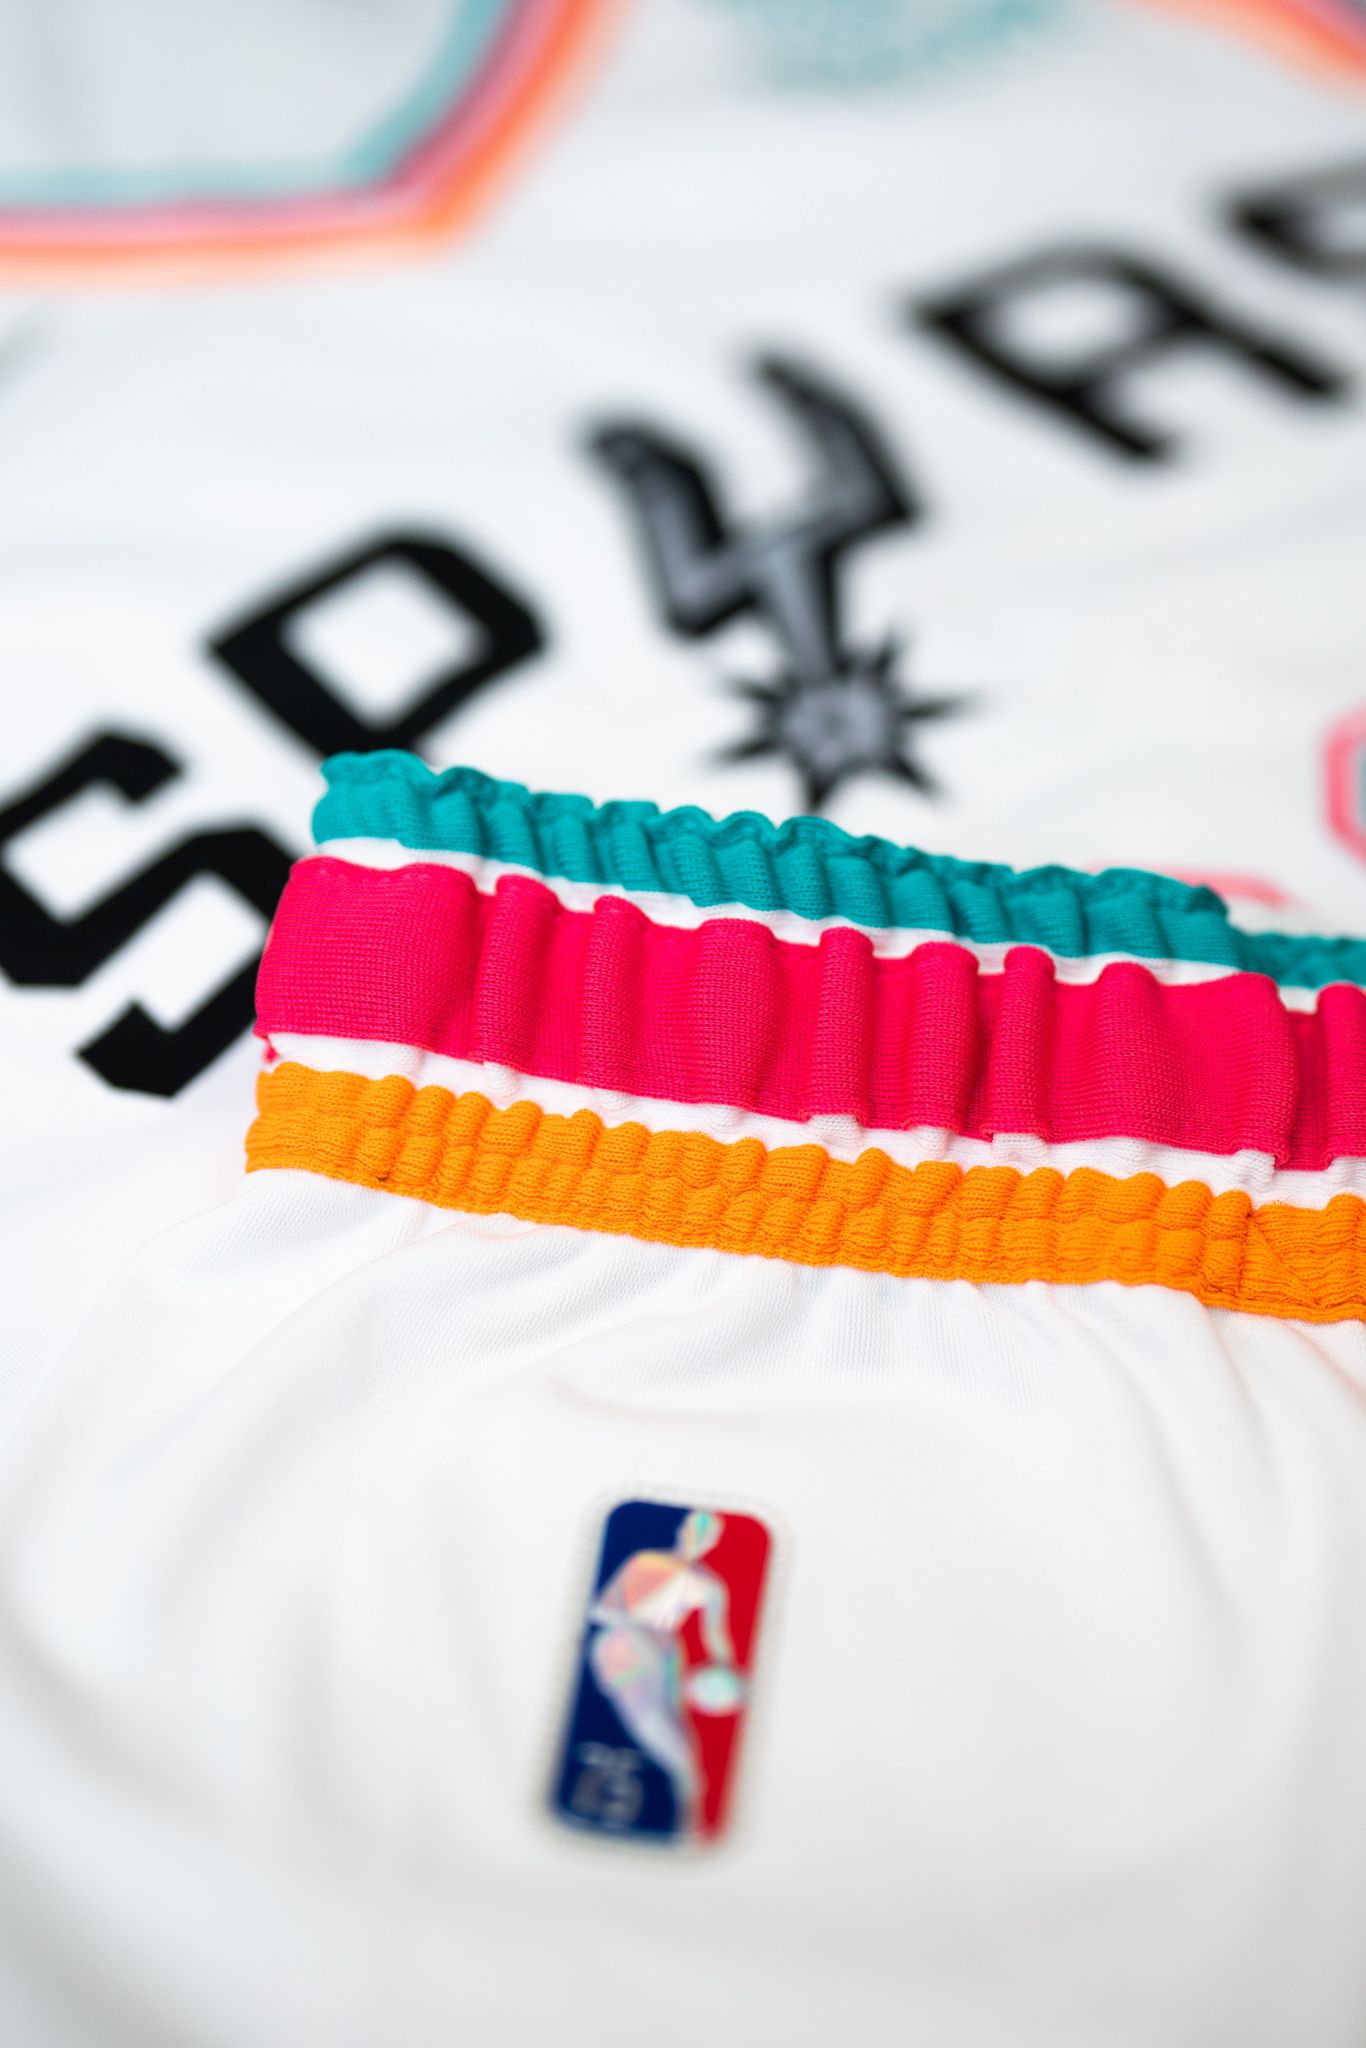 San Antonio Spurs reveal remixed Fiesta-themed jerseys for this season